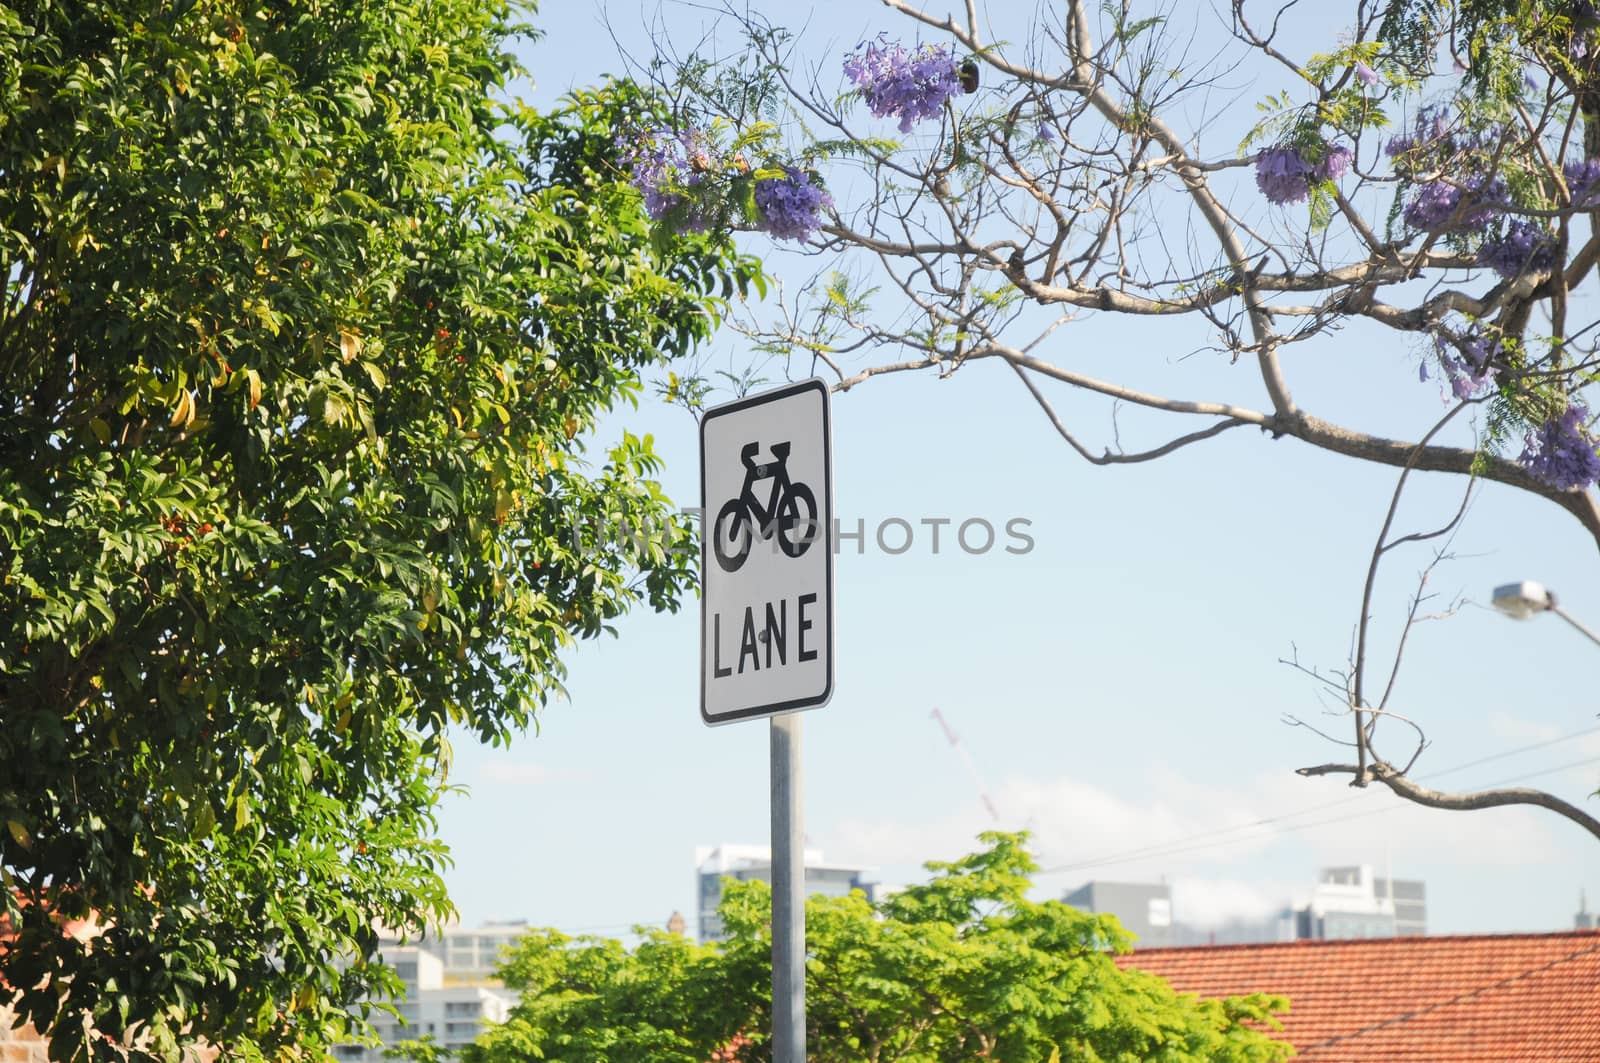 Bike lane sign on a pole